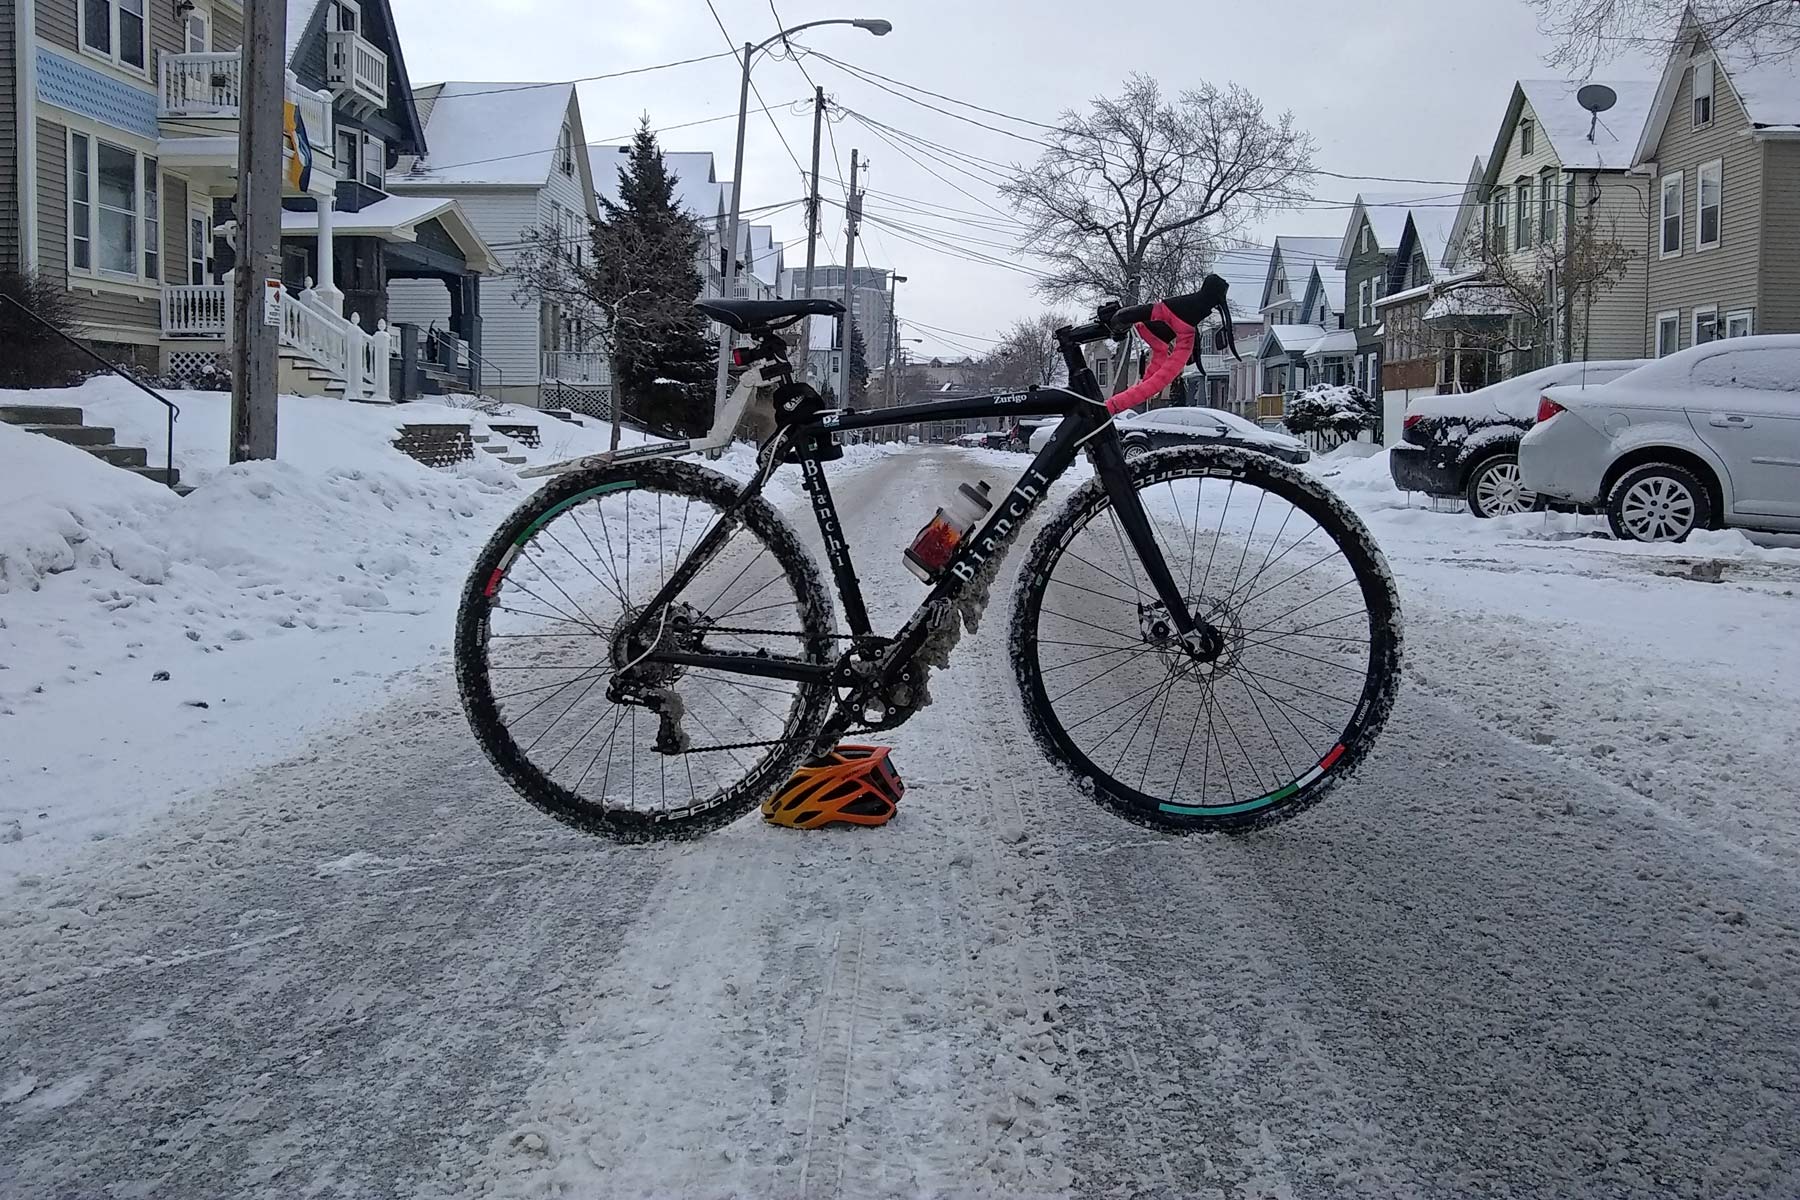 Bikerumor Pic Of The Day: Hard-knock, frozen streets of suburban Milwaukee